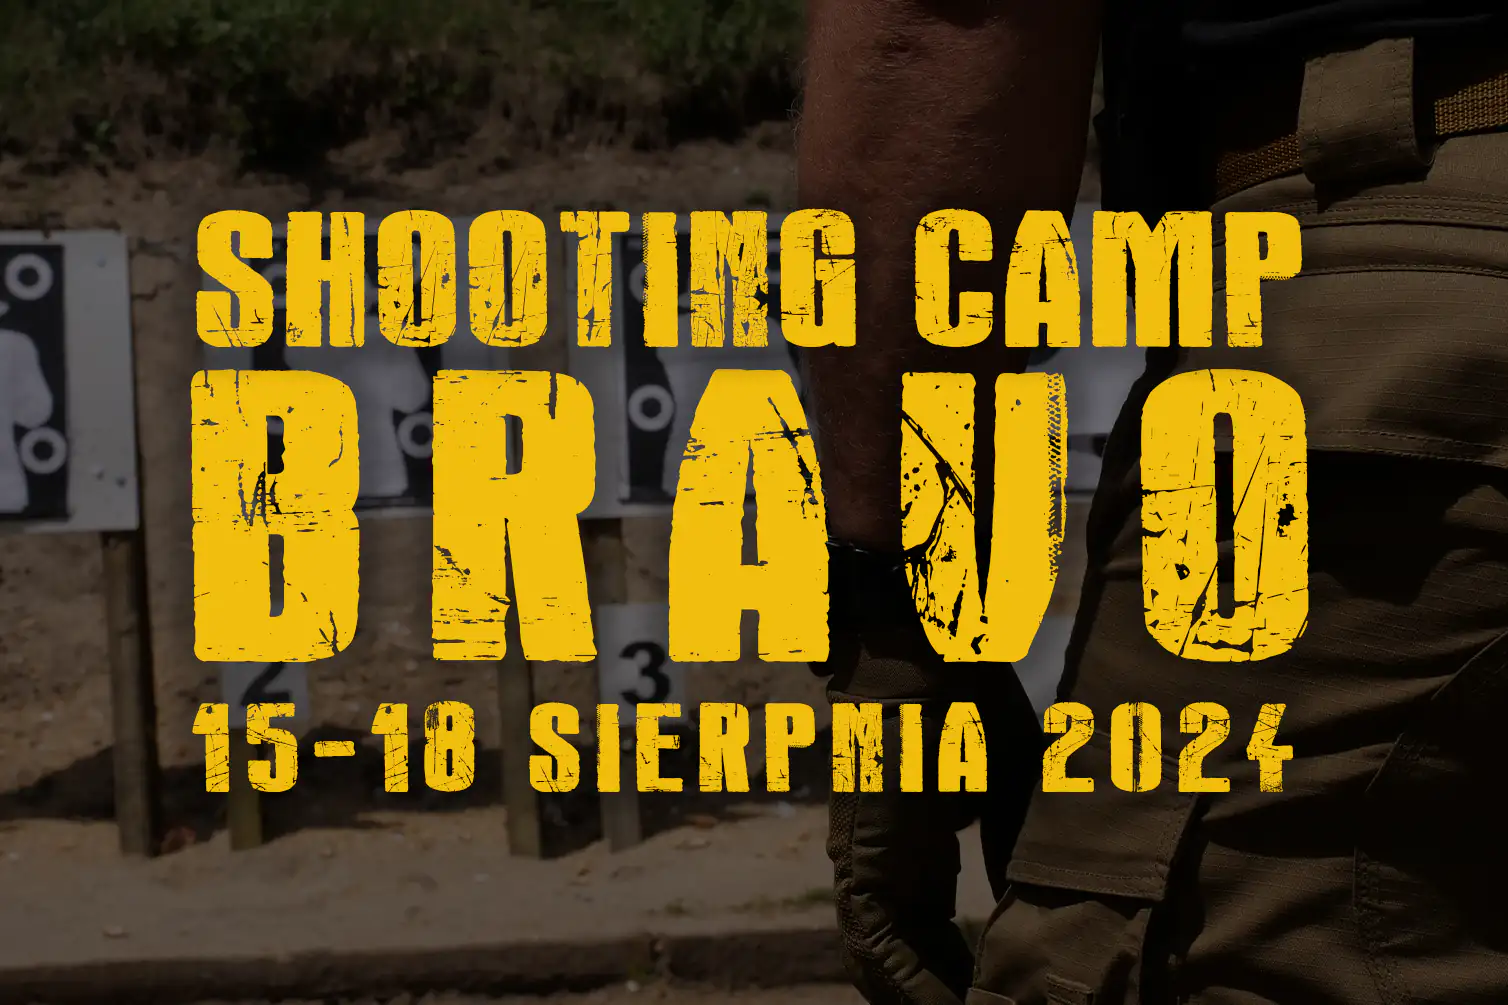 Copy of Shooting Camp BRAVO